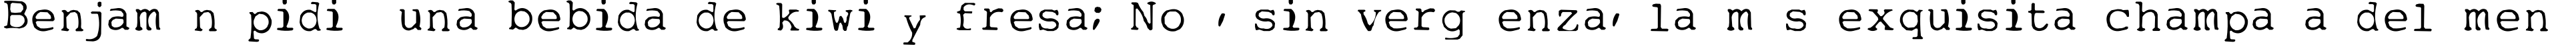 Пример написания шрифтом My type of font текста на испанском